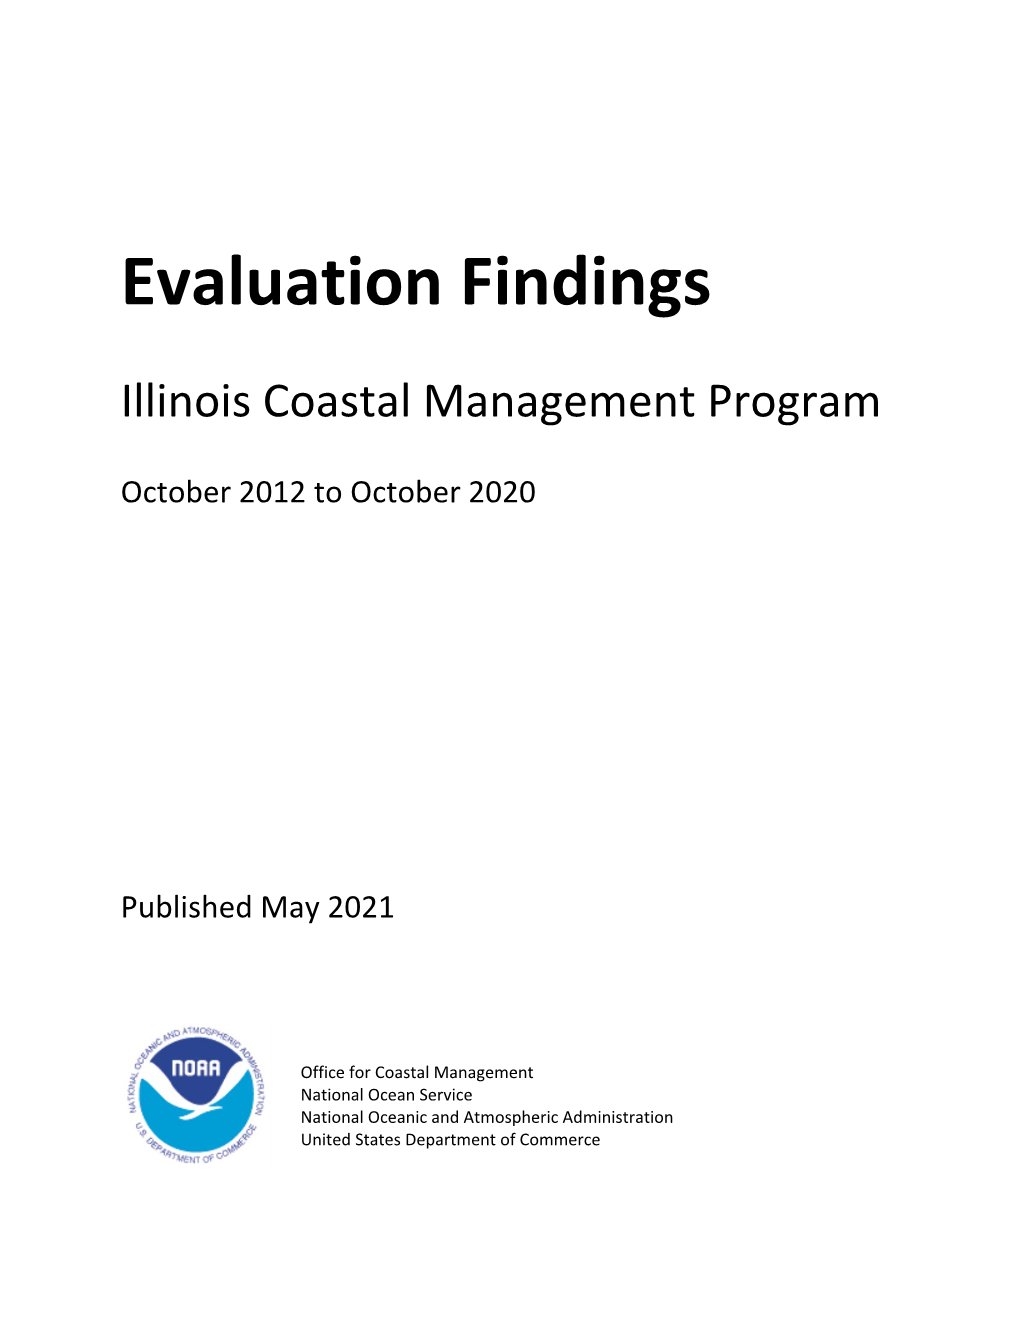 Illinois Coastal Program Evaluation (2021)